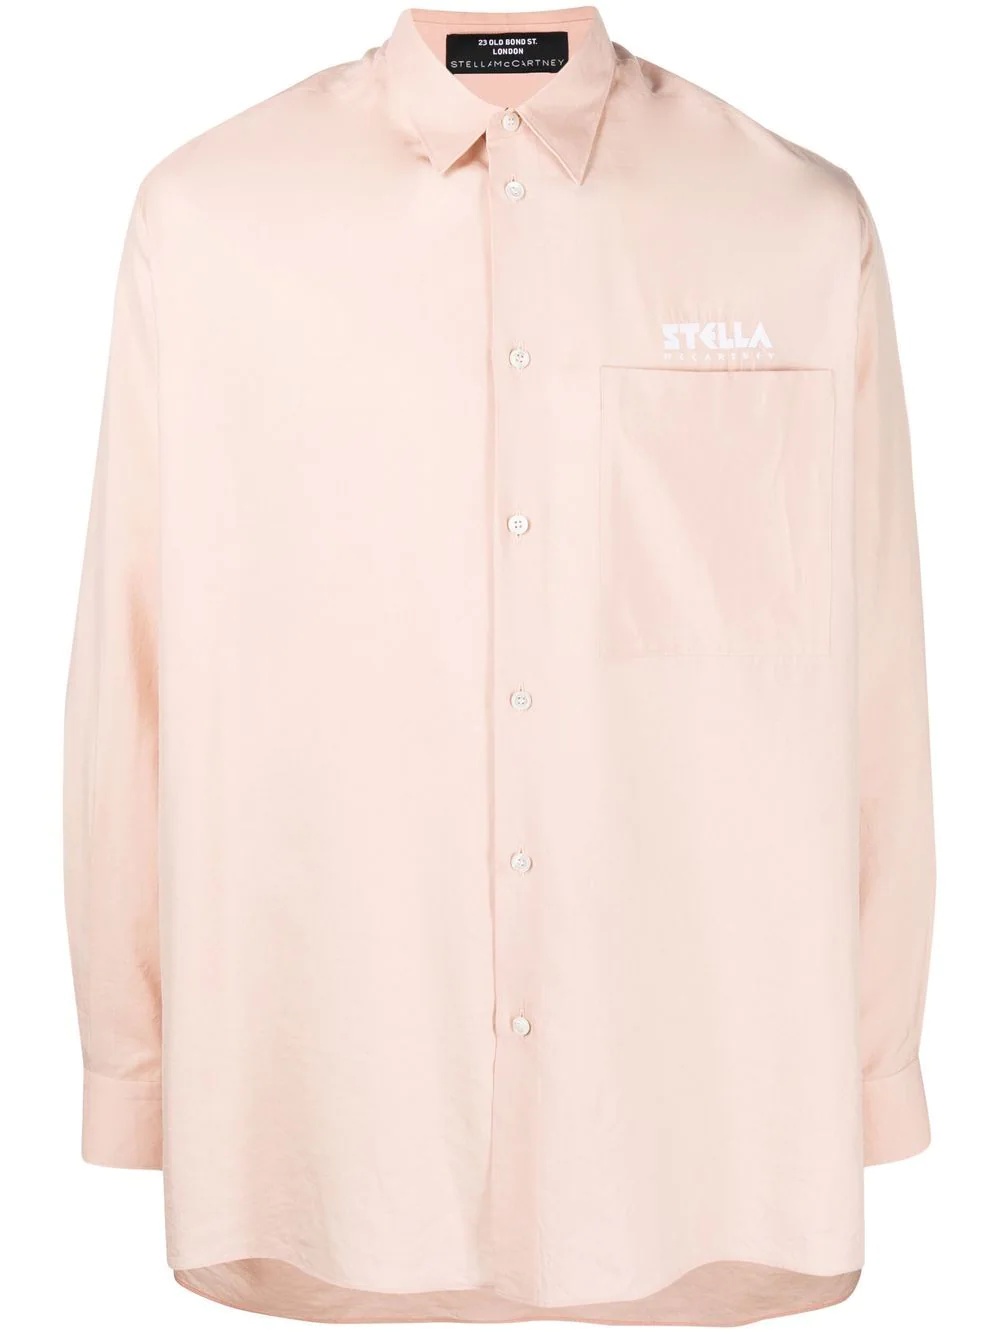 Stella Logo printed shirt - 1